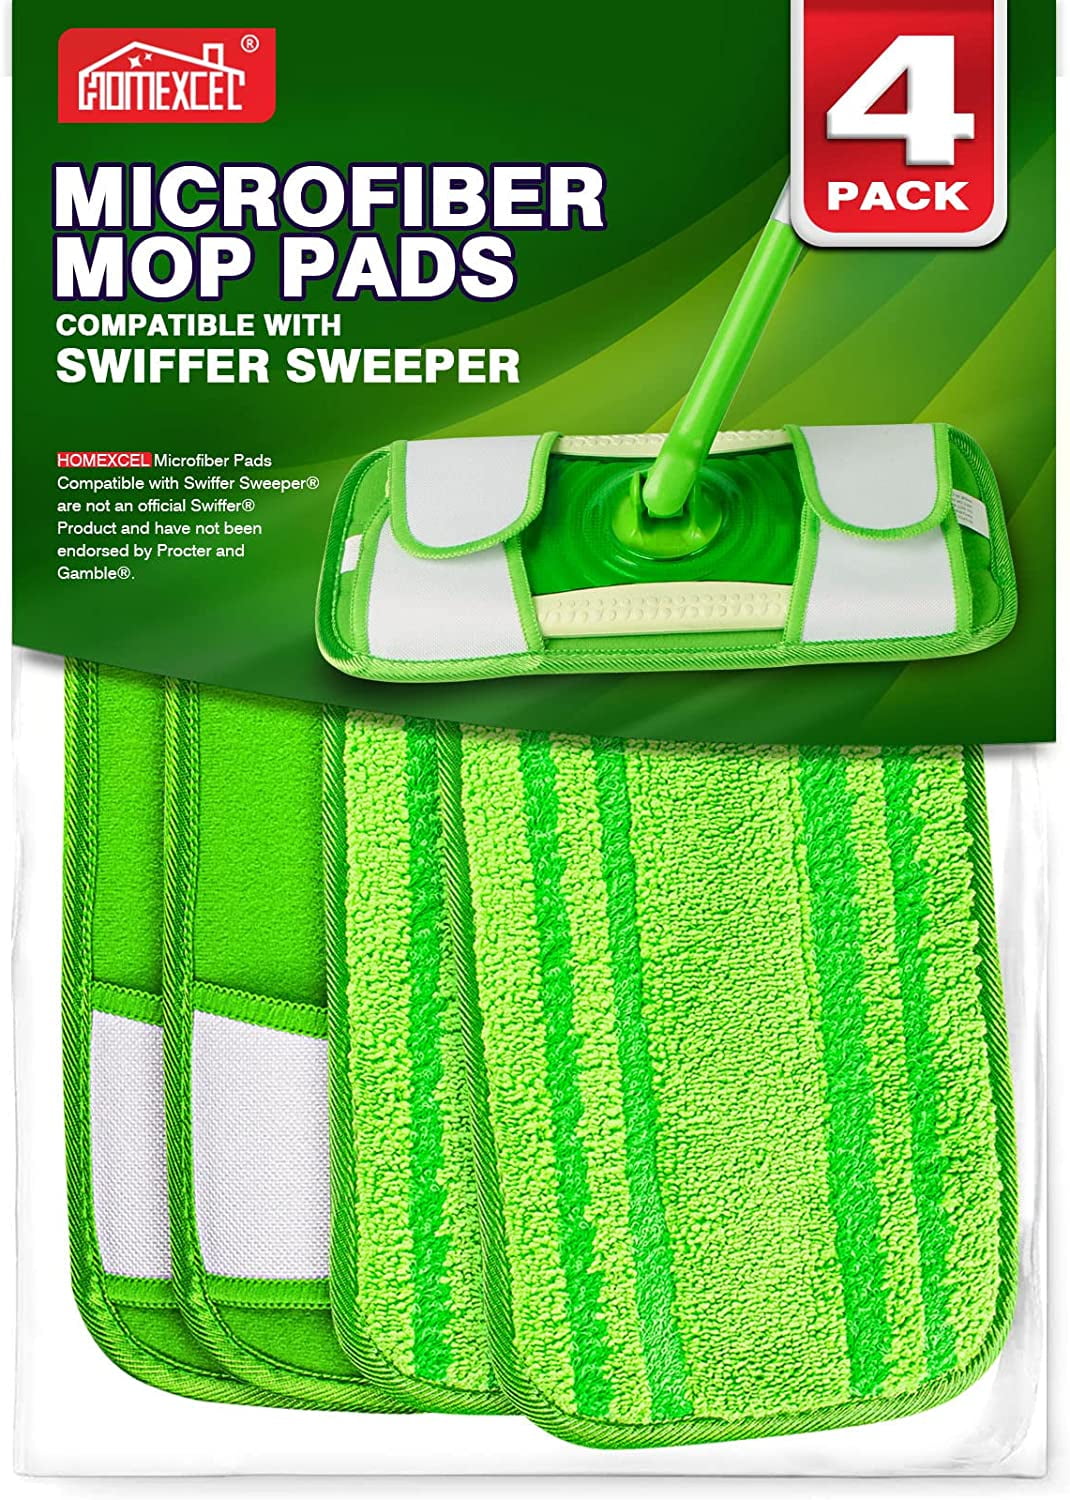 Mop Pads Swiffer Wet Jet Reusable Eco Friendly Handmade Washable